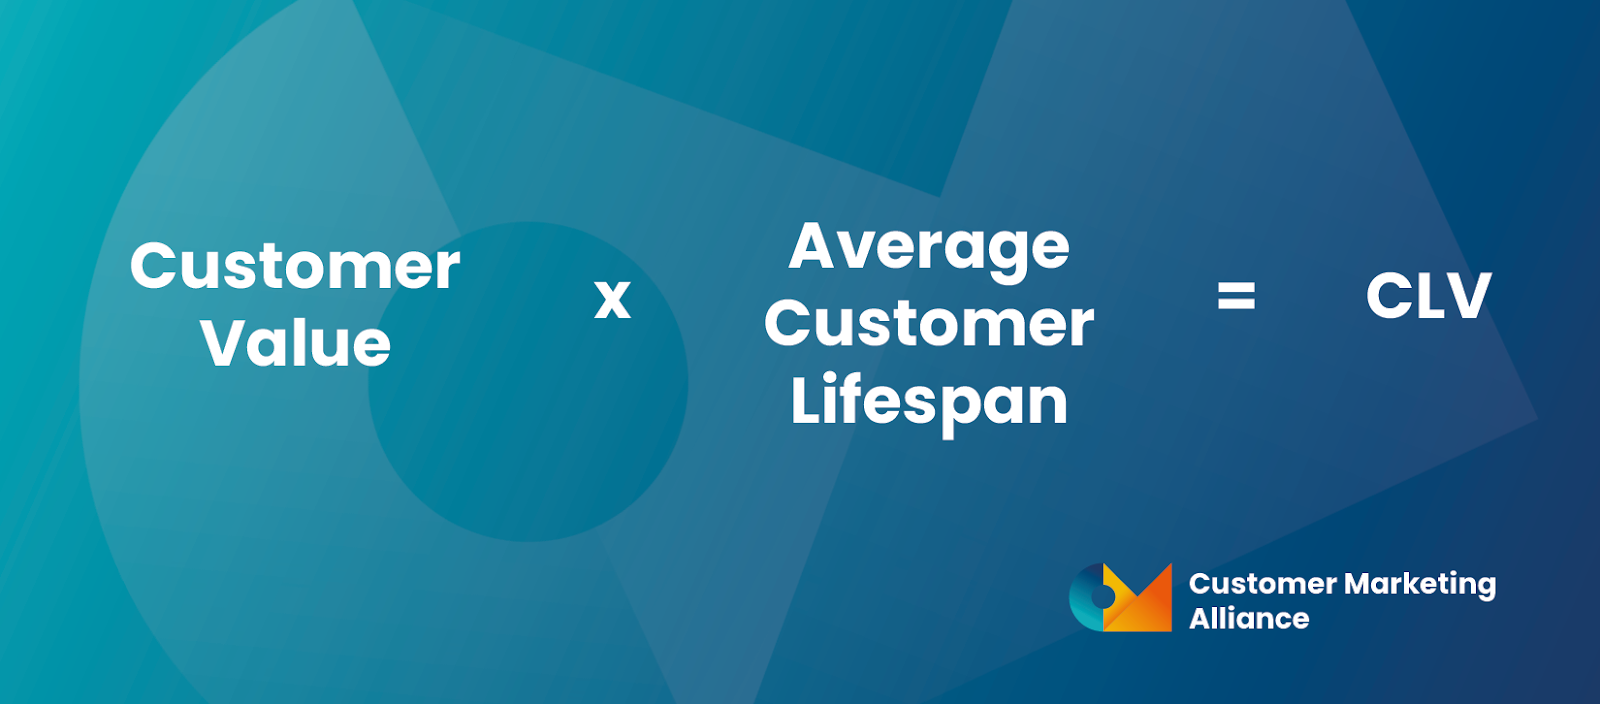 { customer value x average customer lifespan = CLV }